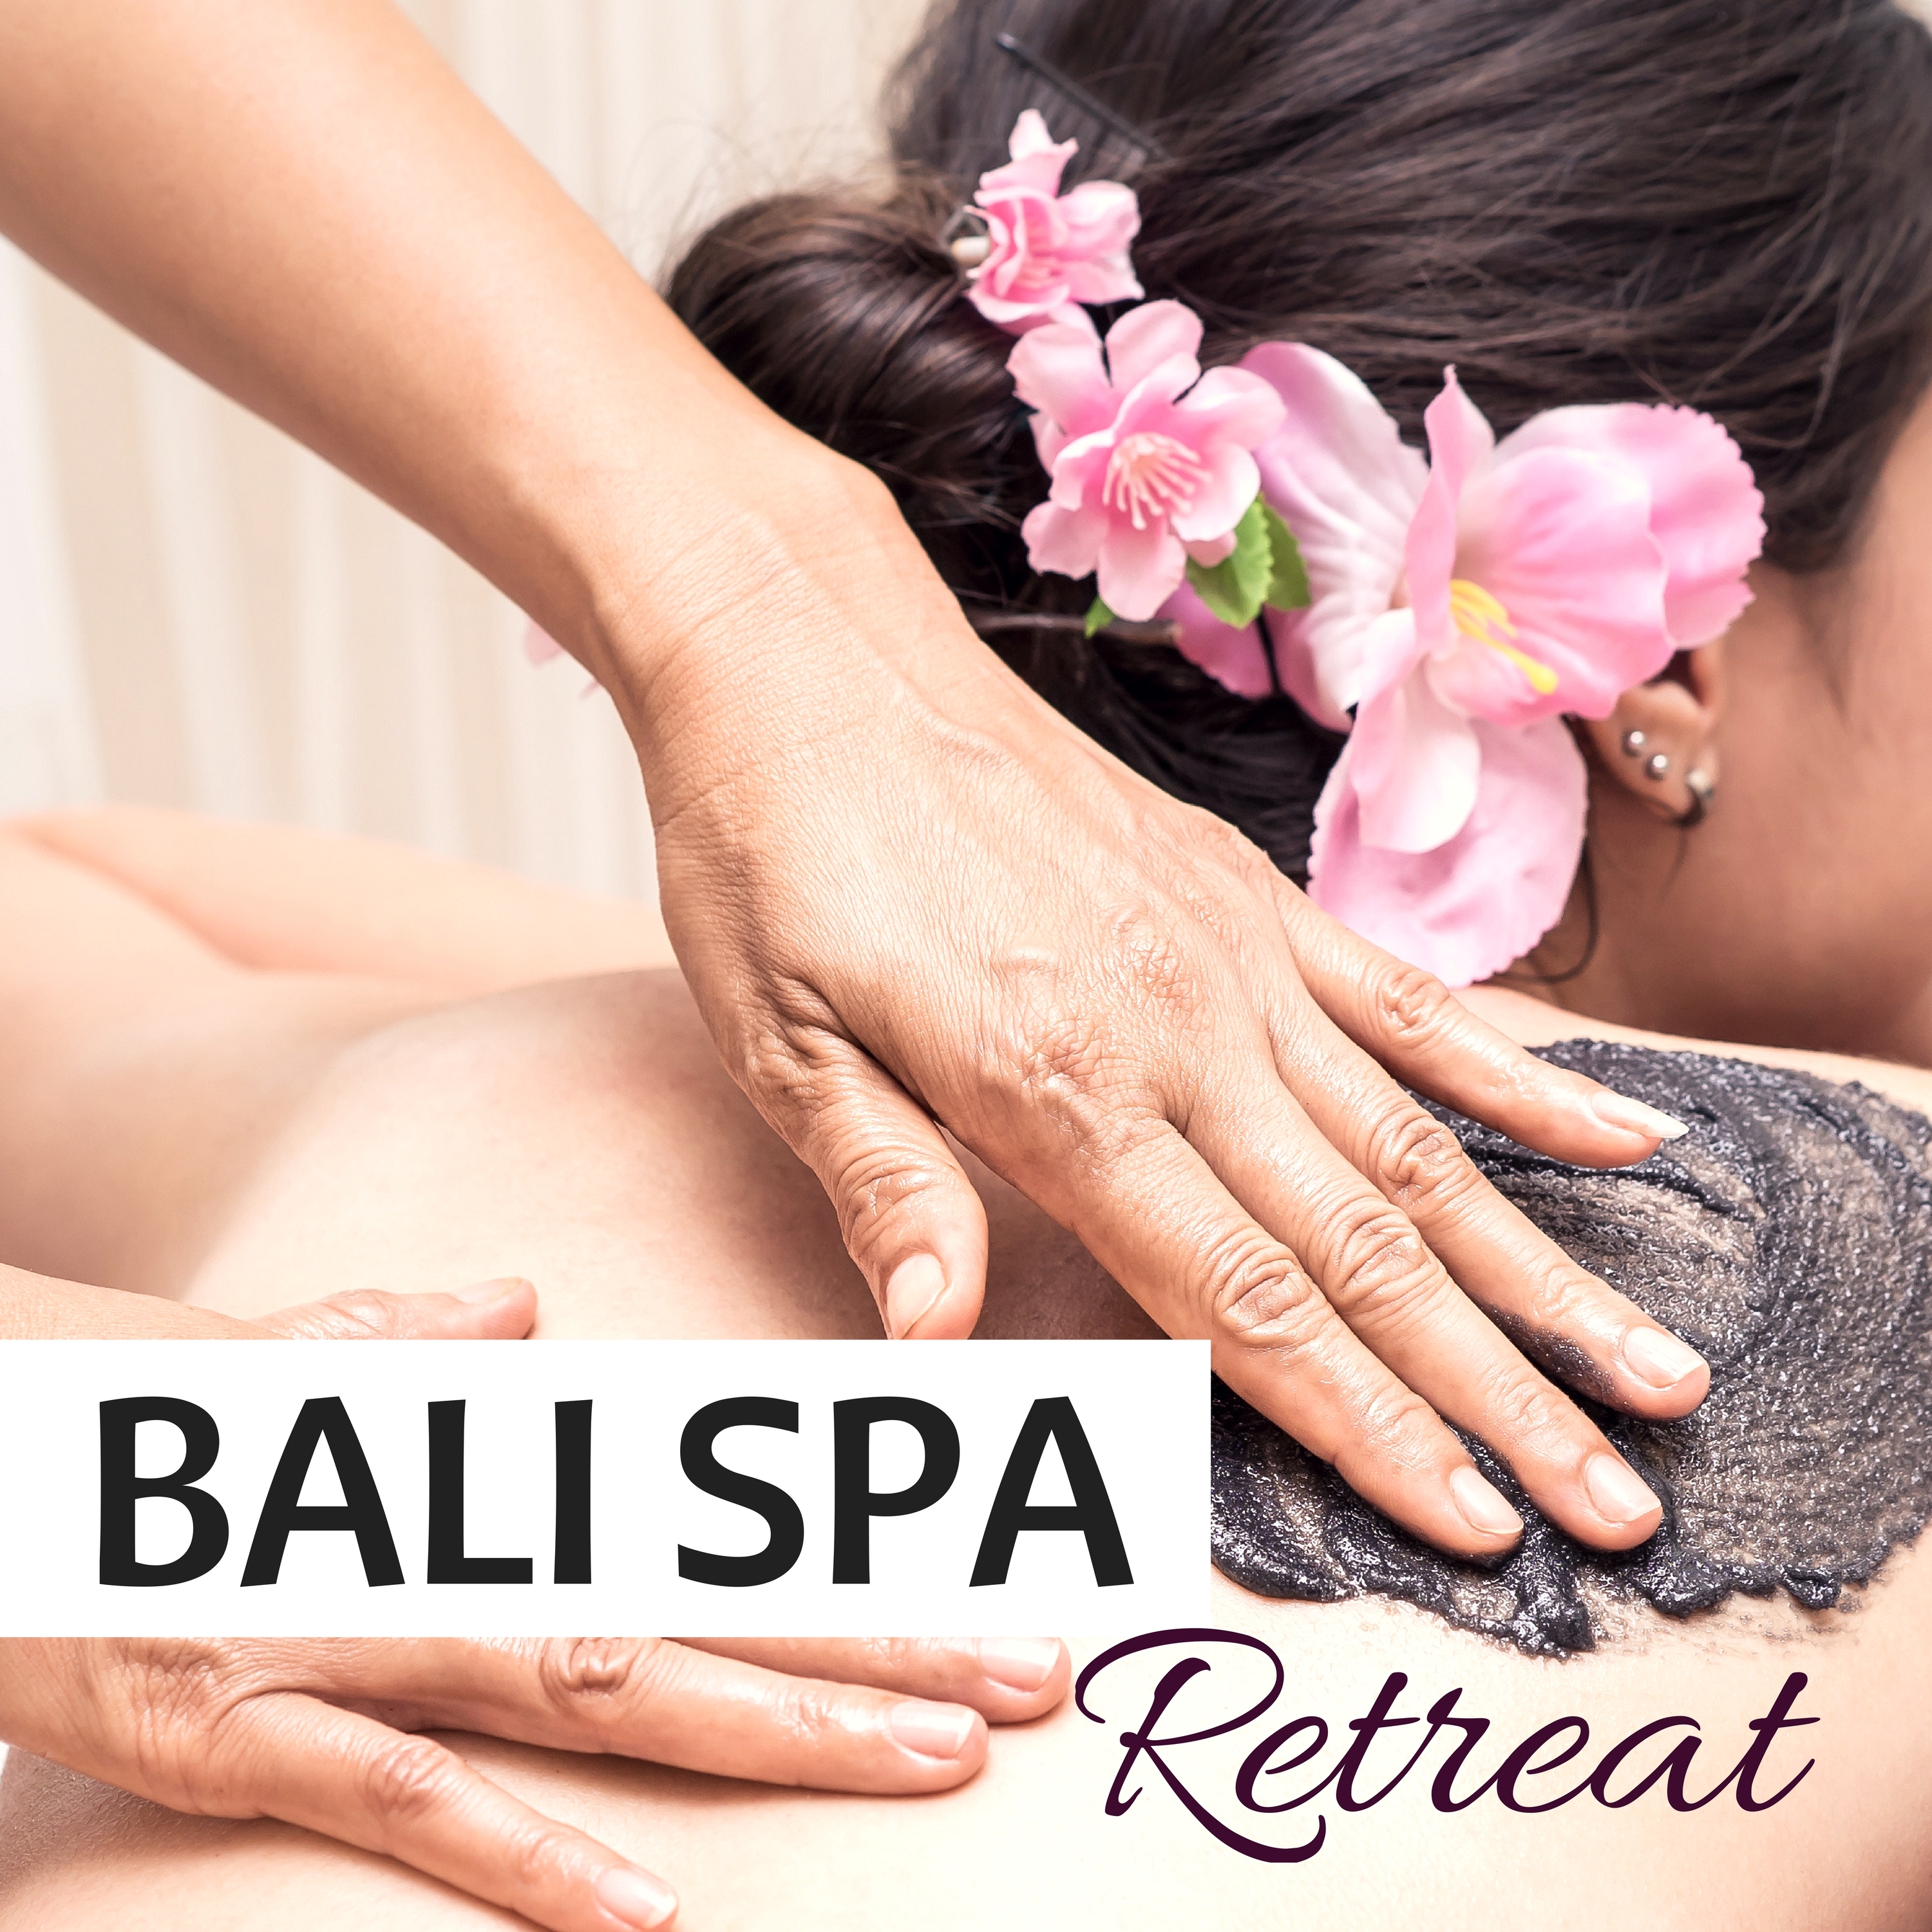 Bali Spa Retreat - Balinese Wellness Music for Tropical Bathhouse Experience